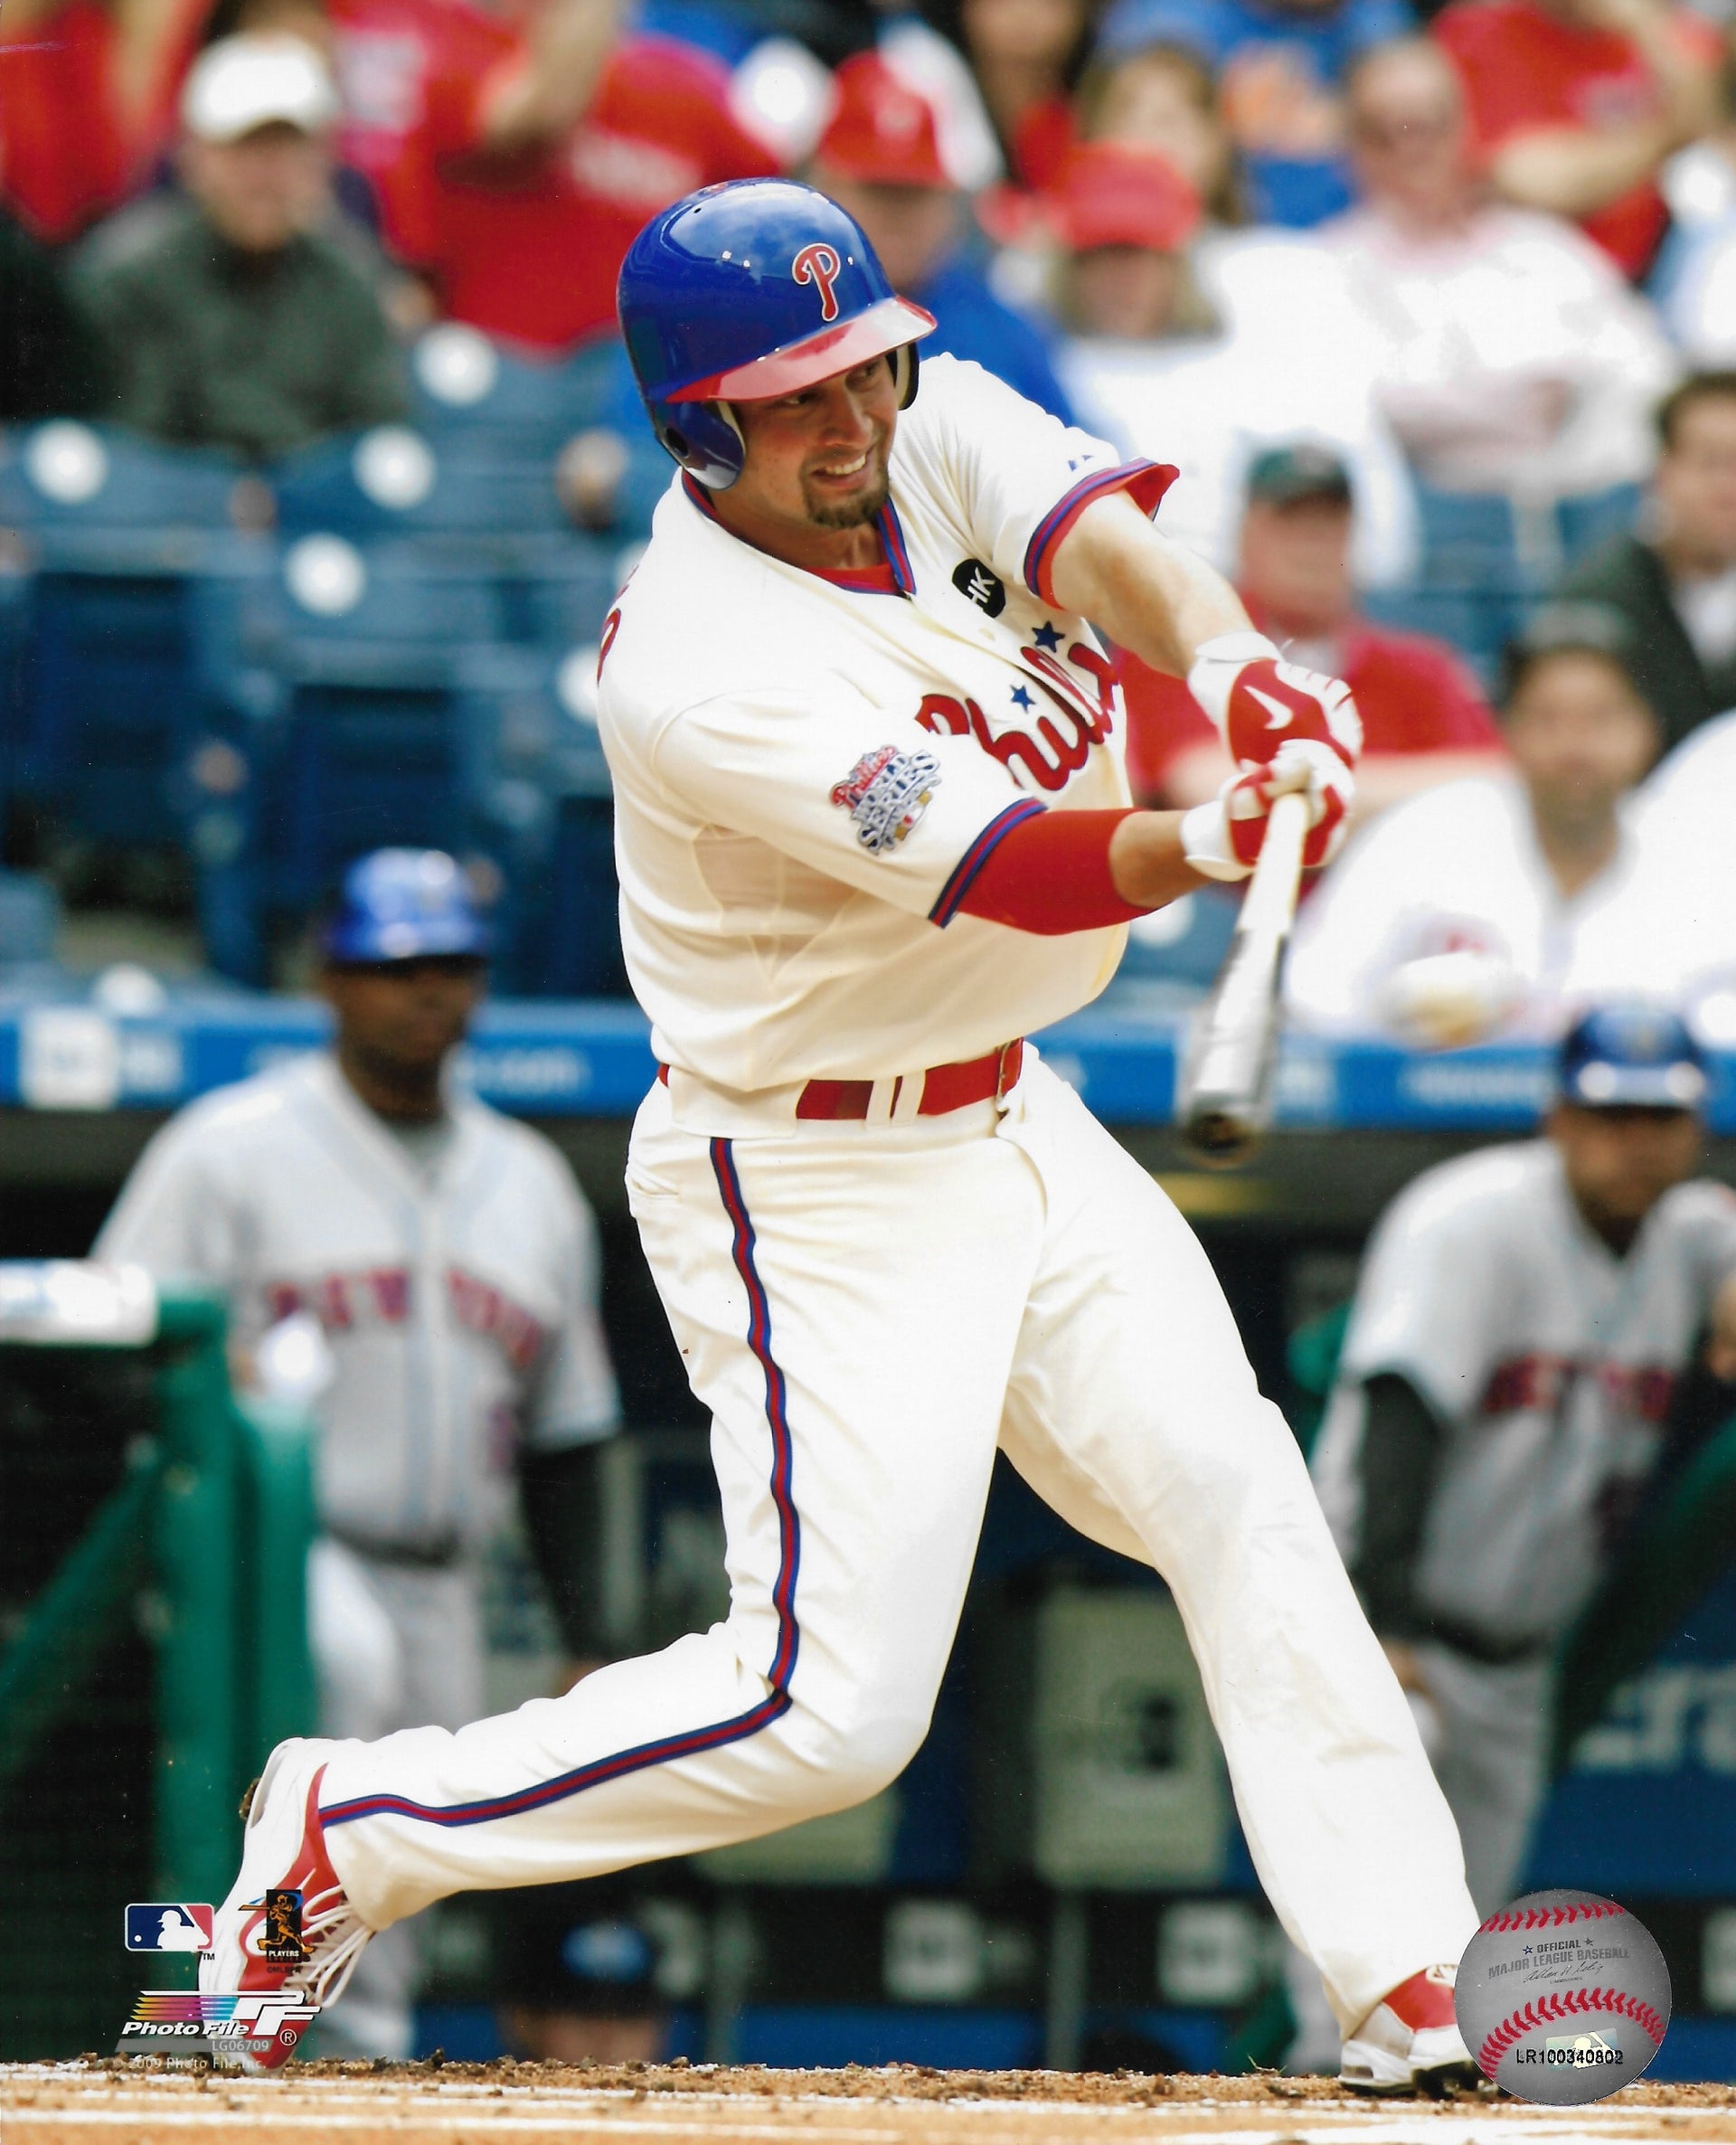 Shane Victorino in Action Philadelphia Phillies 8 x 10 Baseball Photo